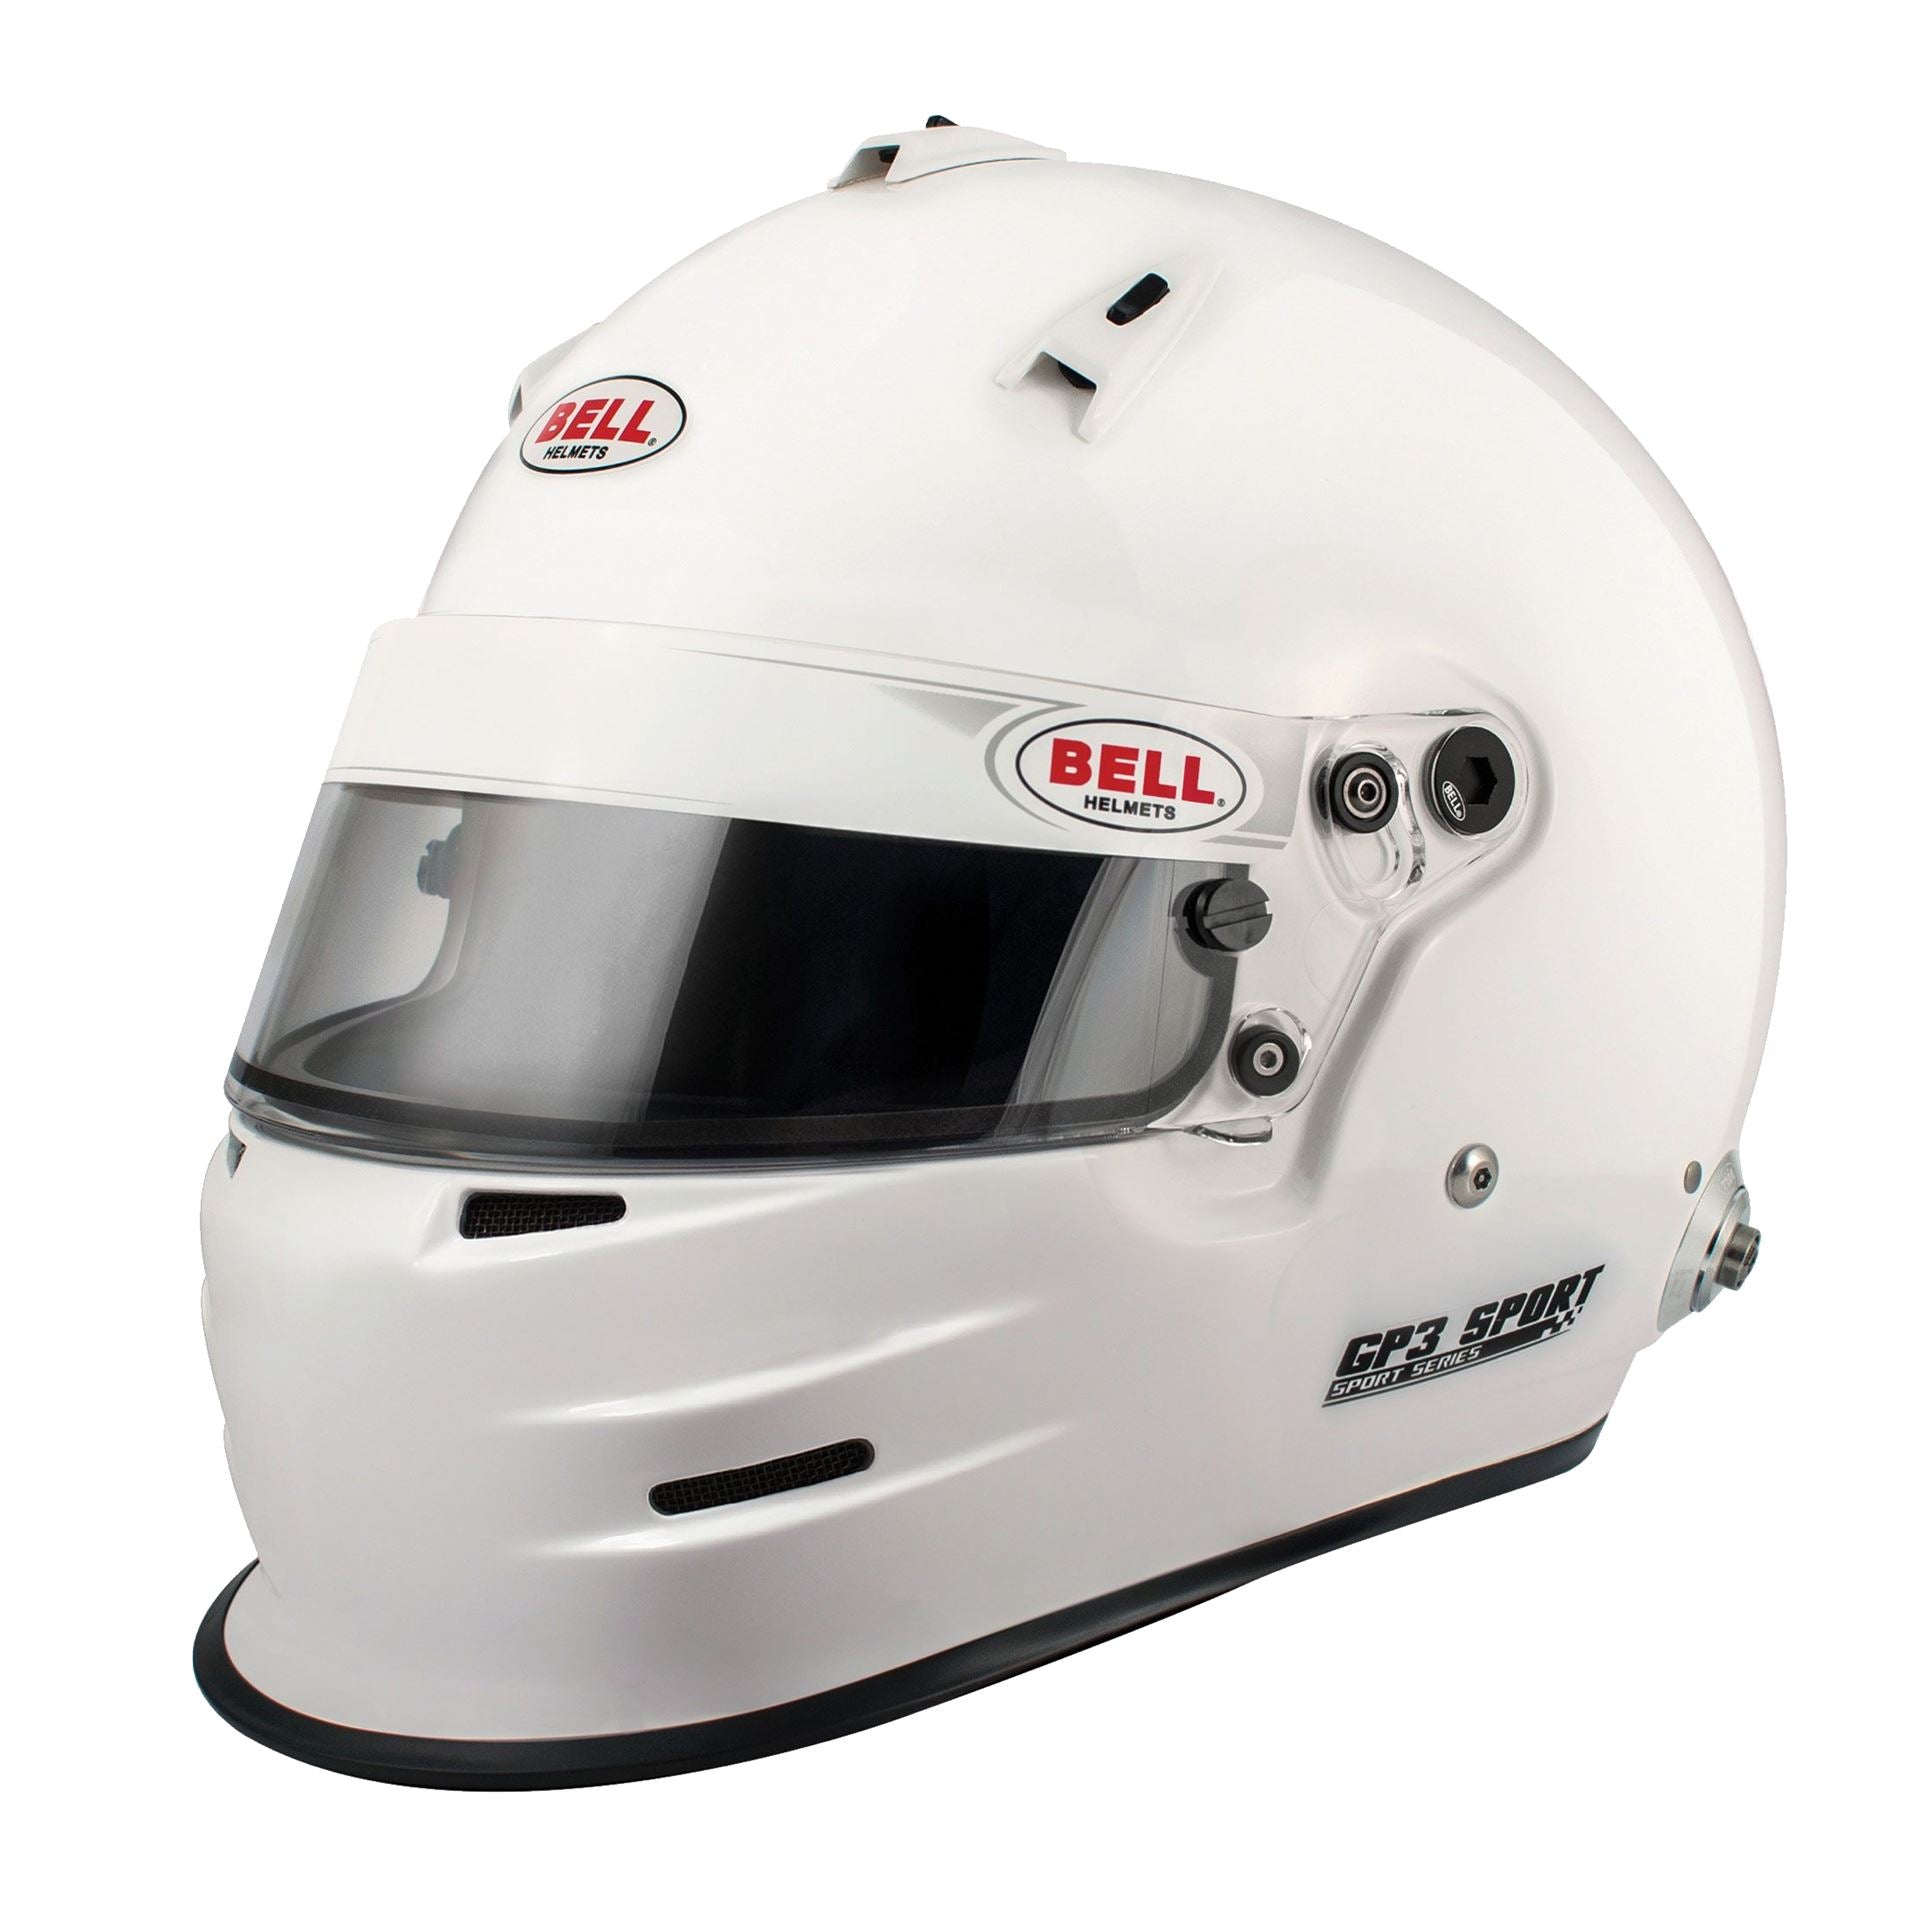 BELL 1417021 Racing helmet full-face GP3 SPORT, HANS, FIA8859, white, size SML (57-58) Photo-0 